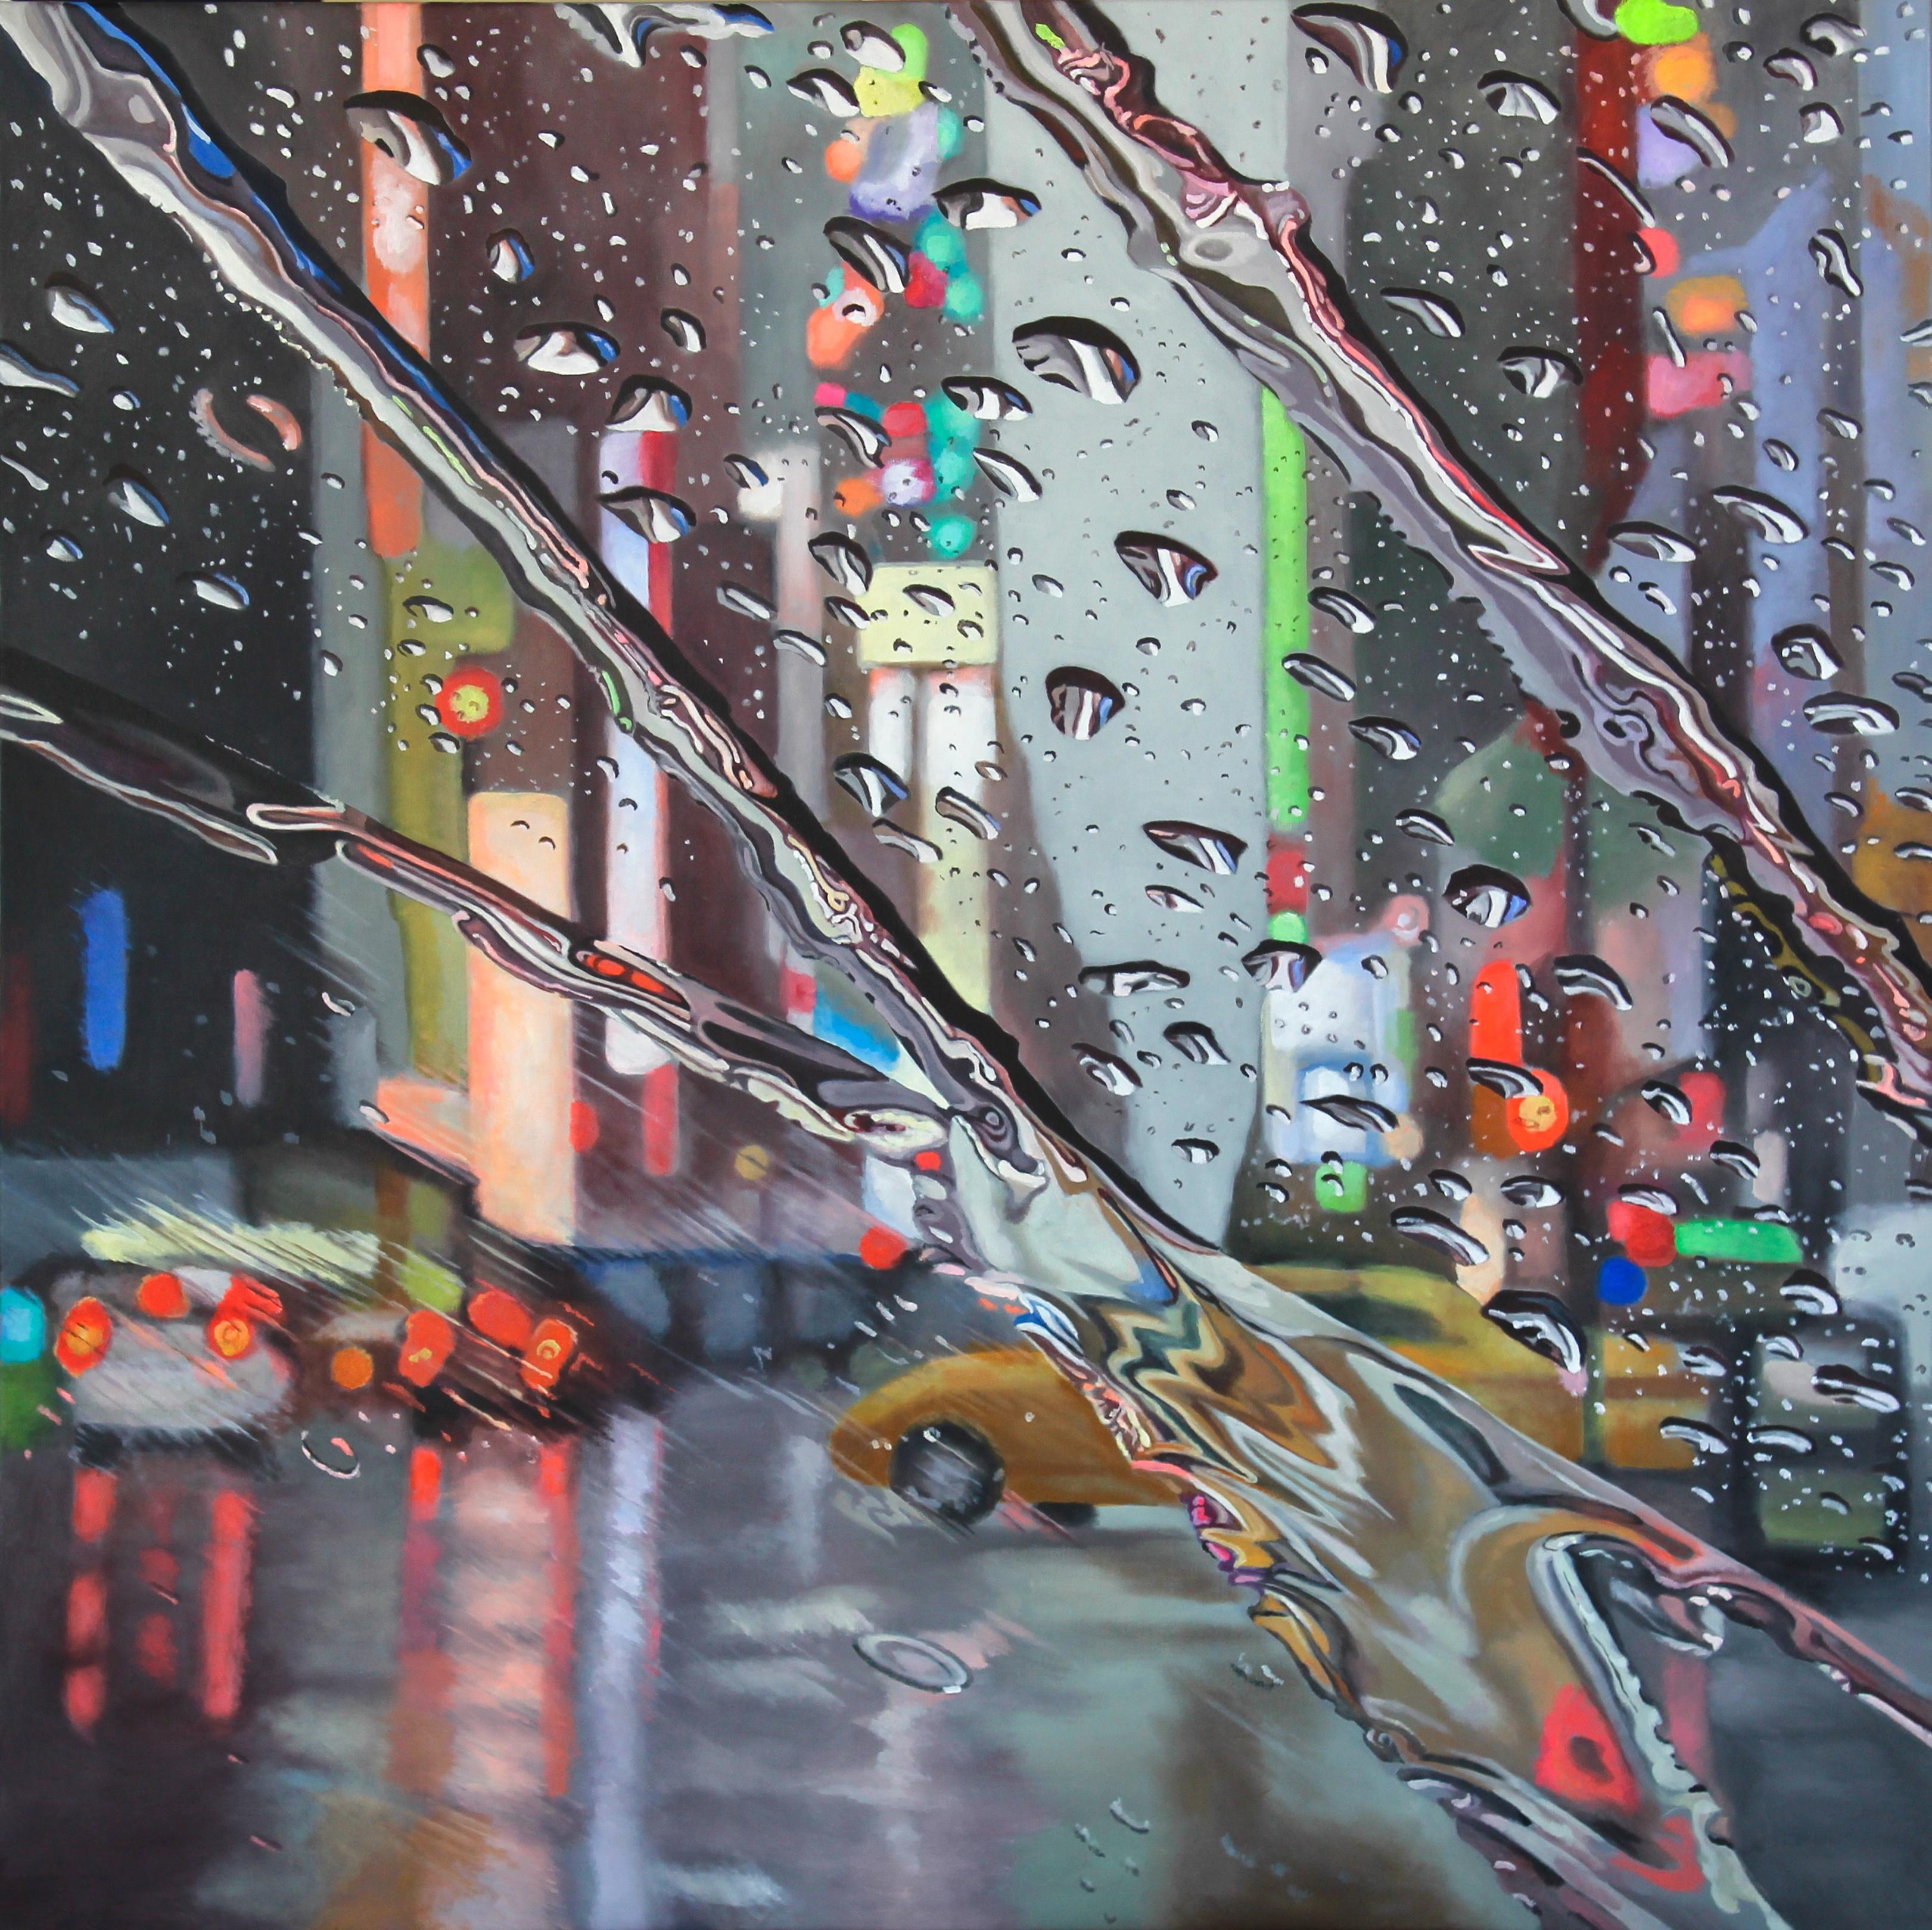 Michael Steinbrick Landscape Painting - Slick City - Original New York cityscape realism modern urban car oil painting